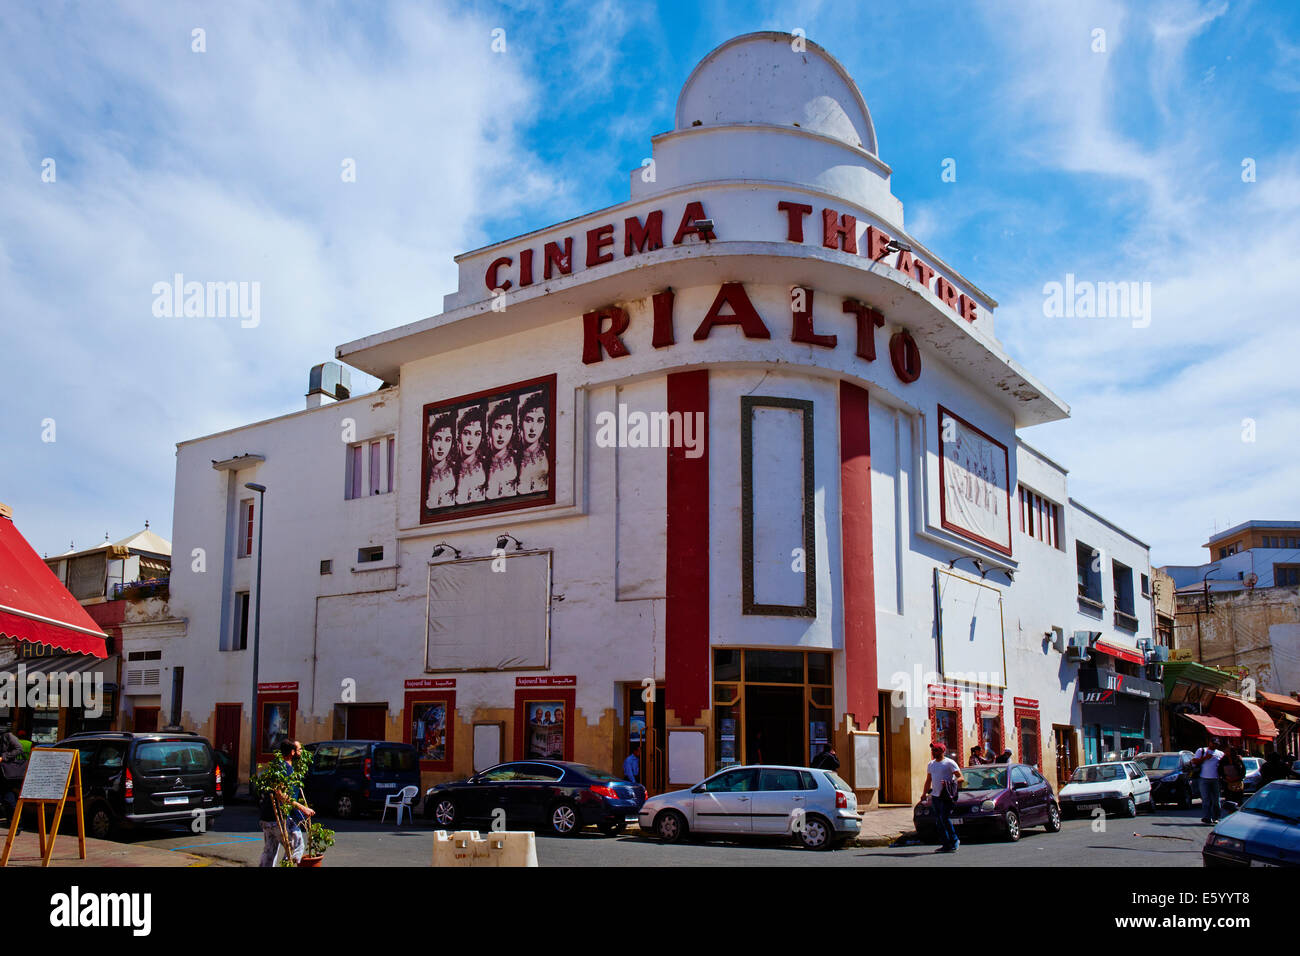 Morocco, Casablanca, Rialto cinema and theater Stock Photo